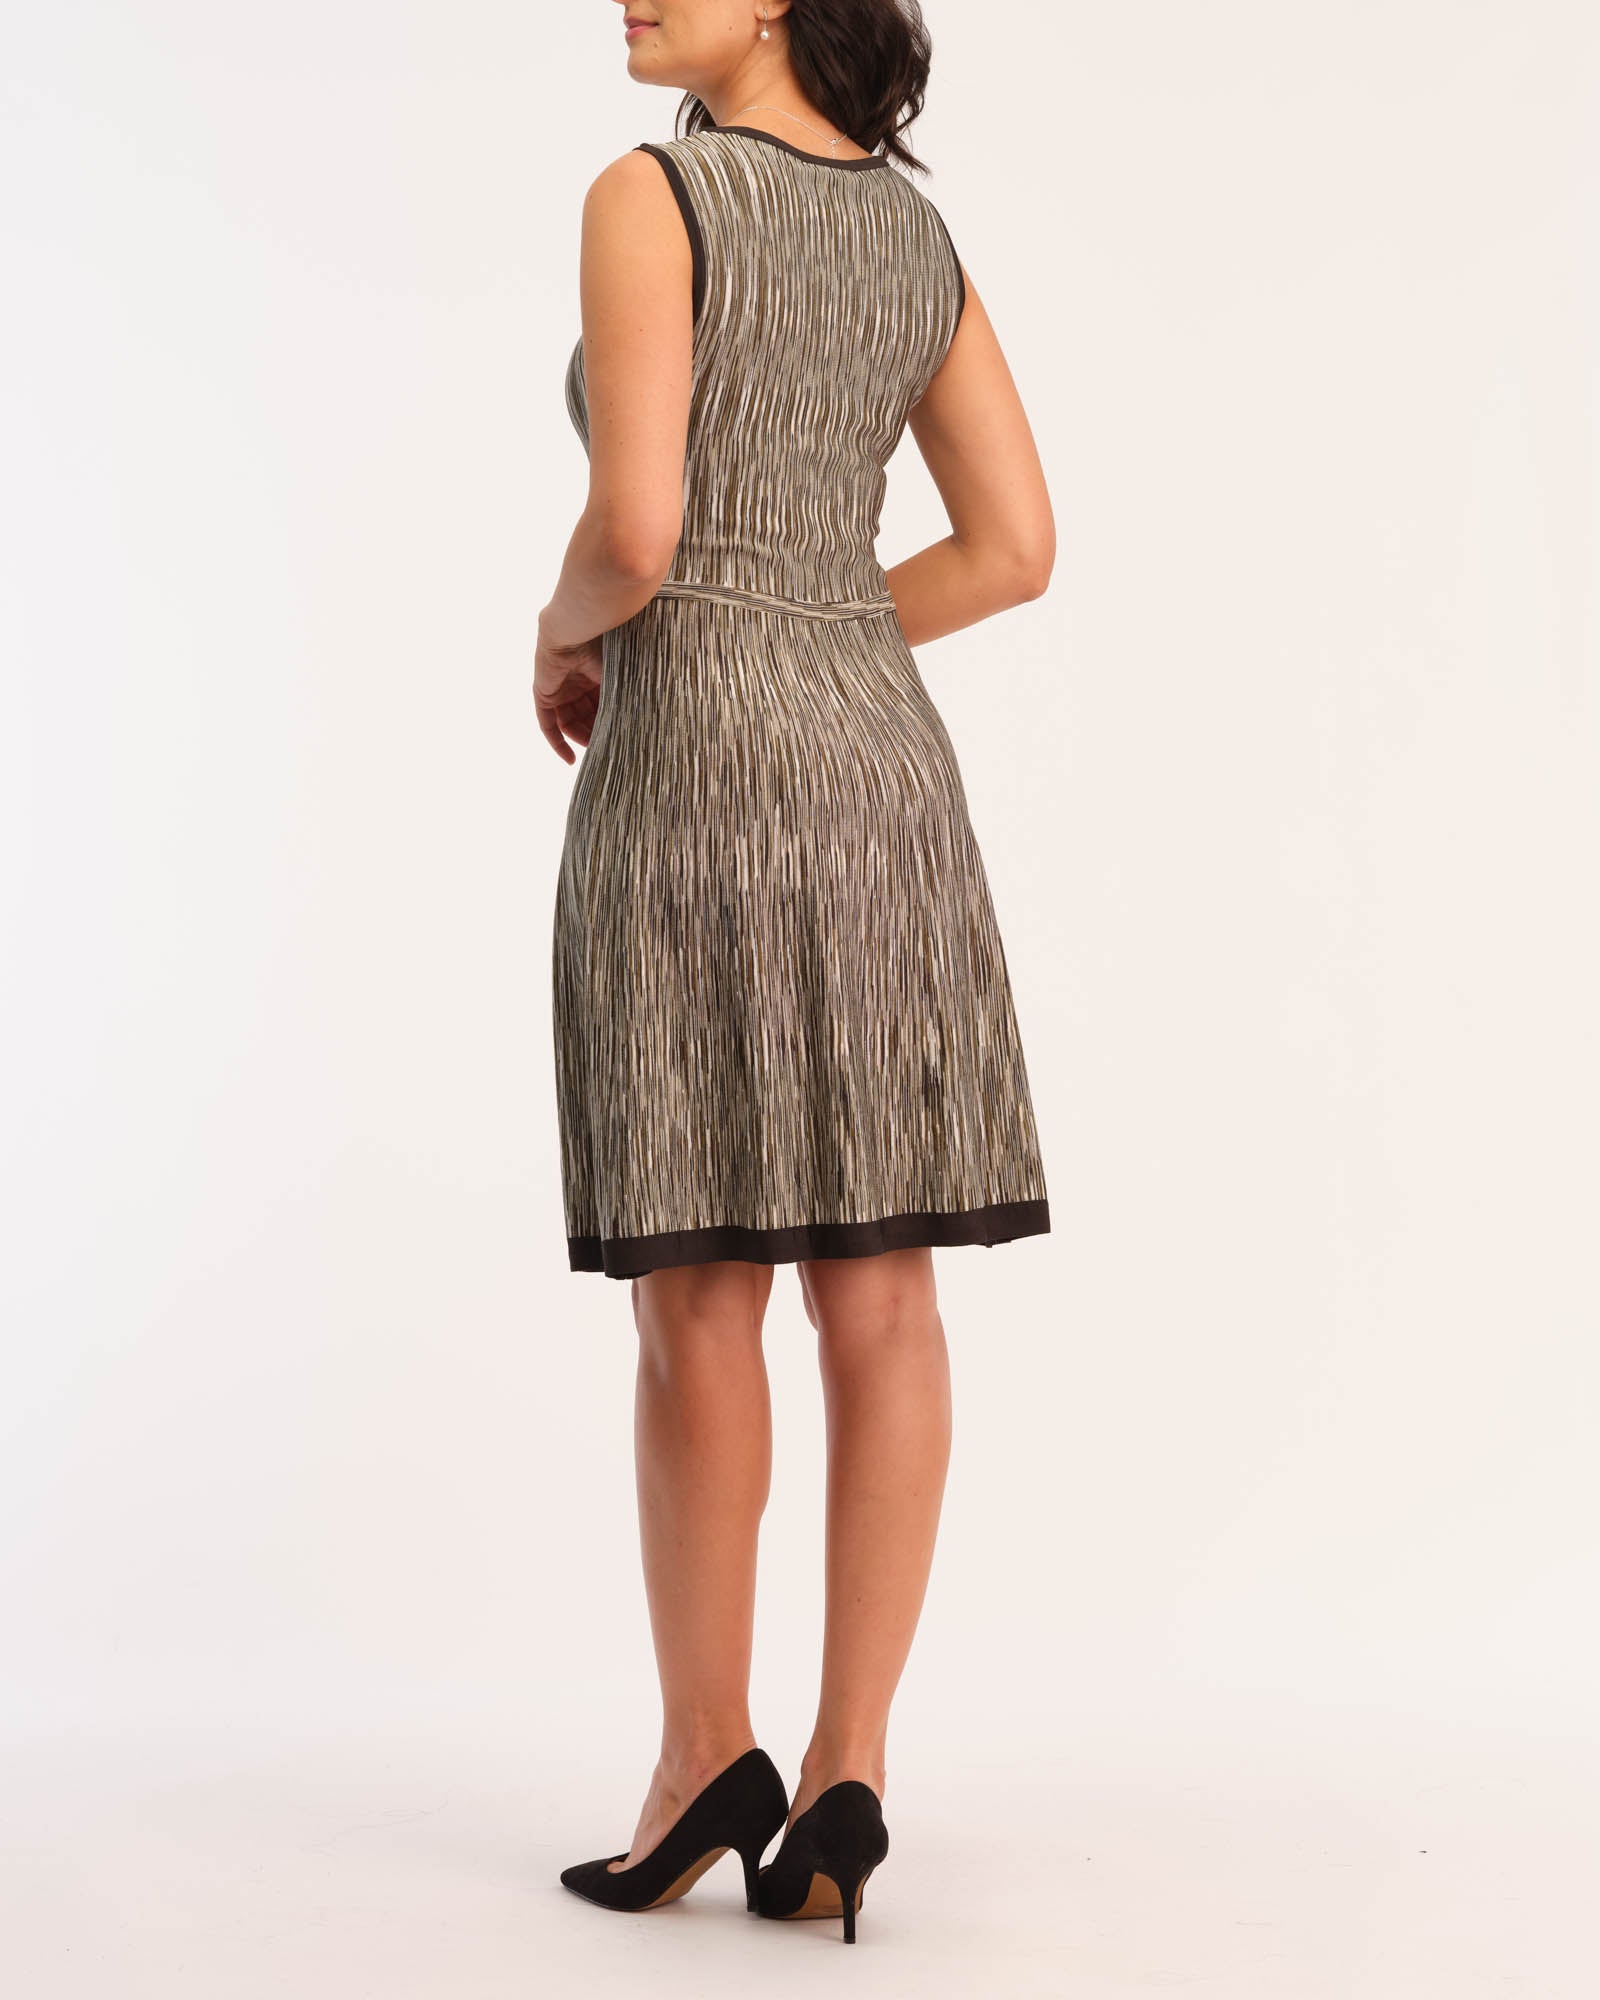 Shop Catherine Malandrino Women's Crewneck Spacedye Fit and Flare Dress | JANE + MERCER